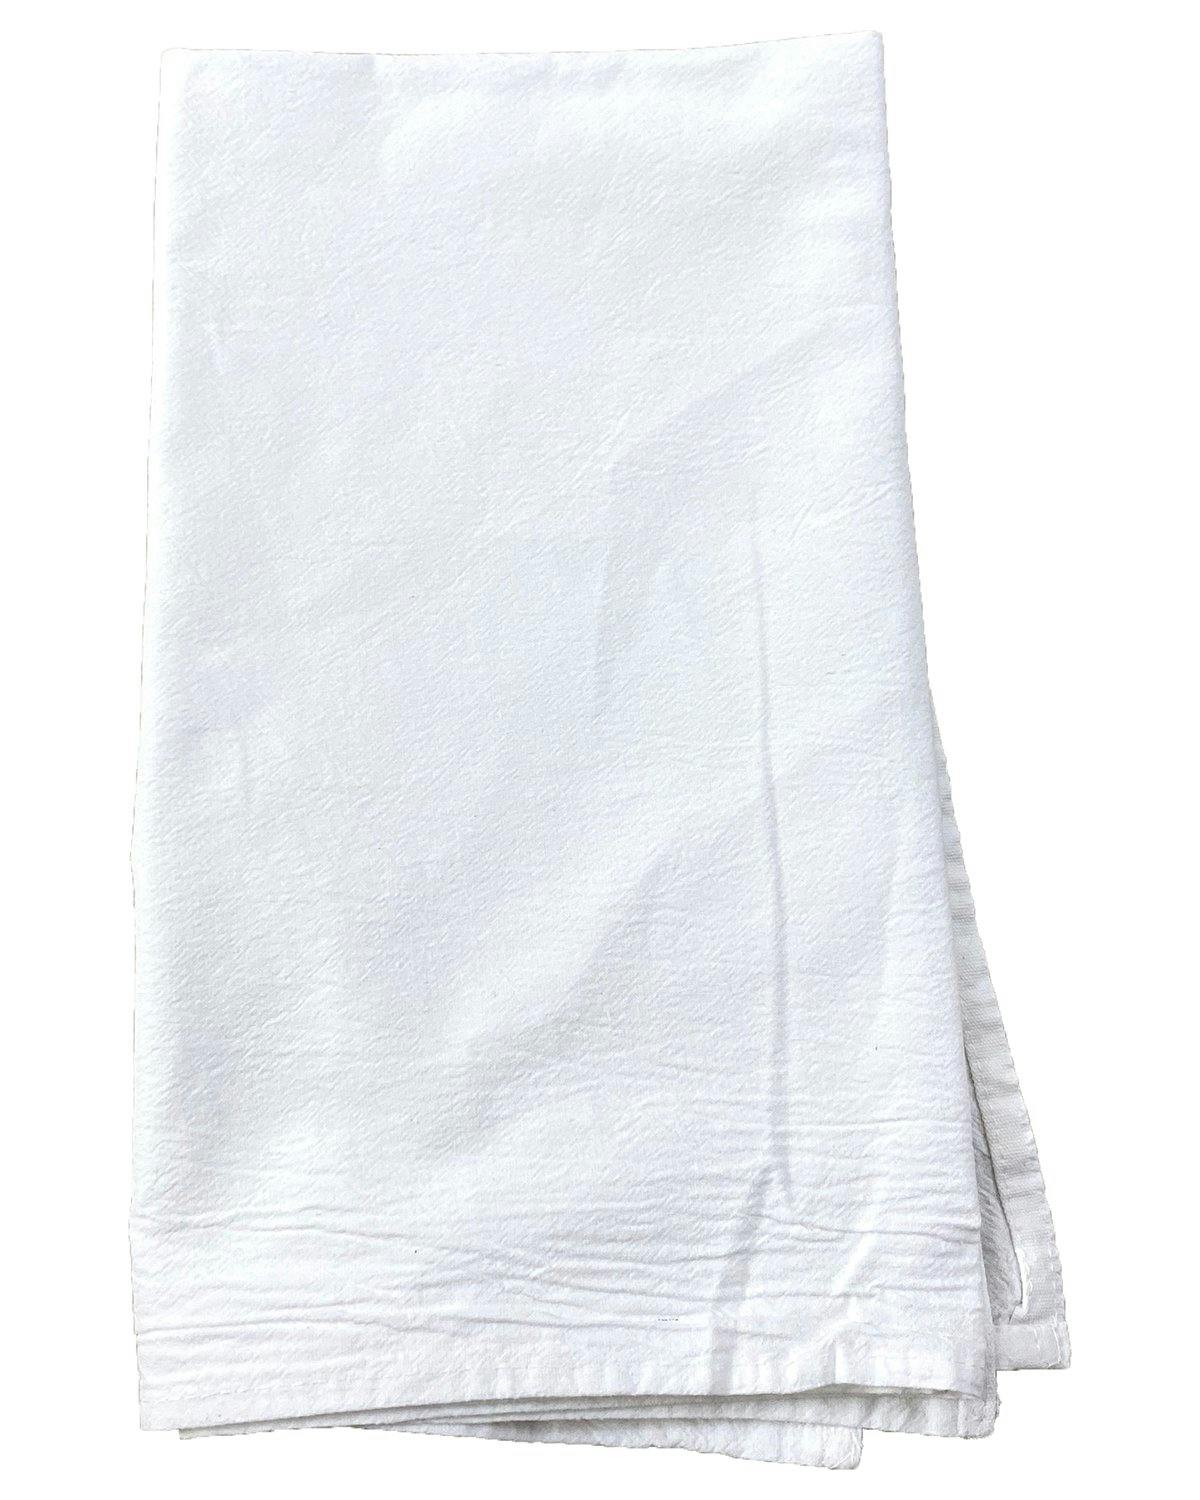 Image for American Flour Sack Towel 15x25